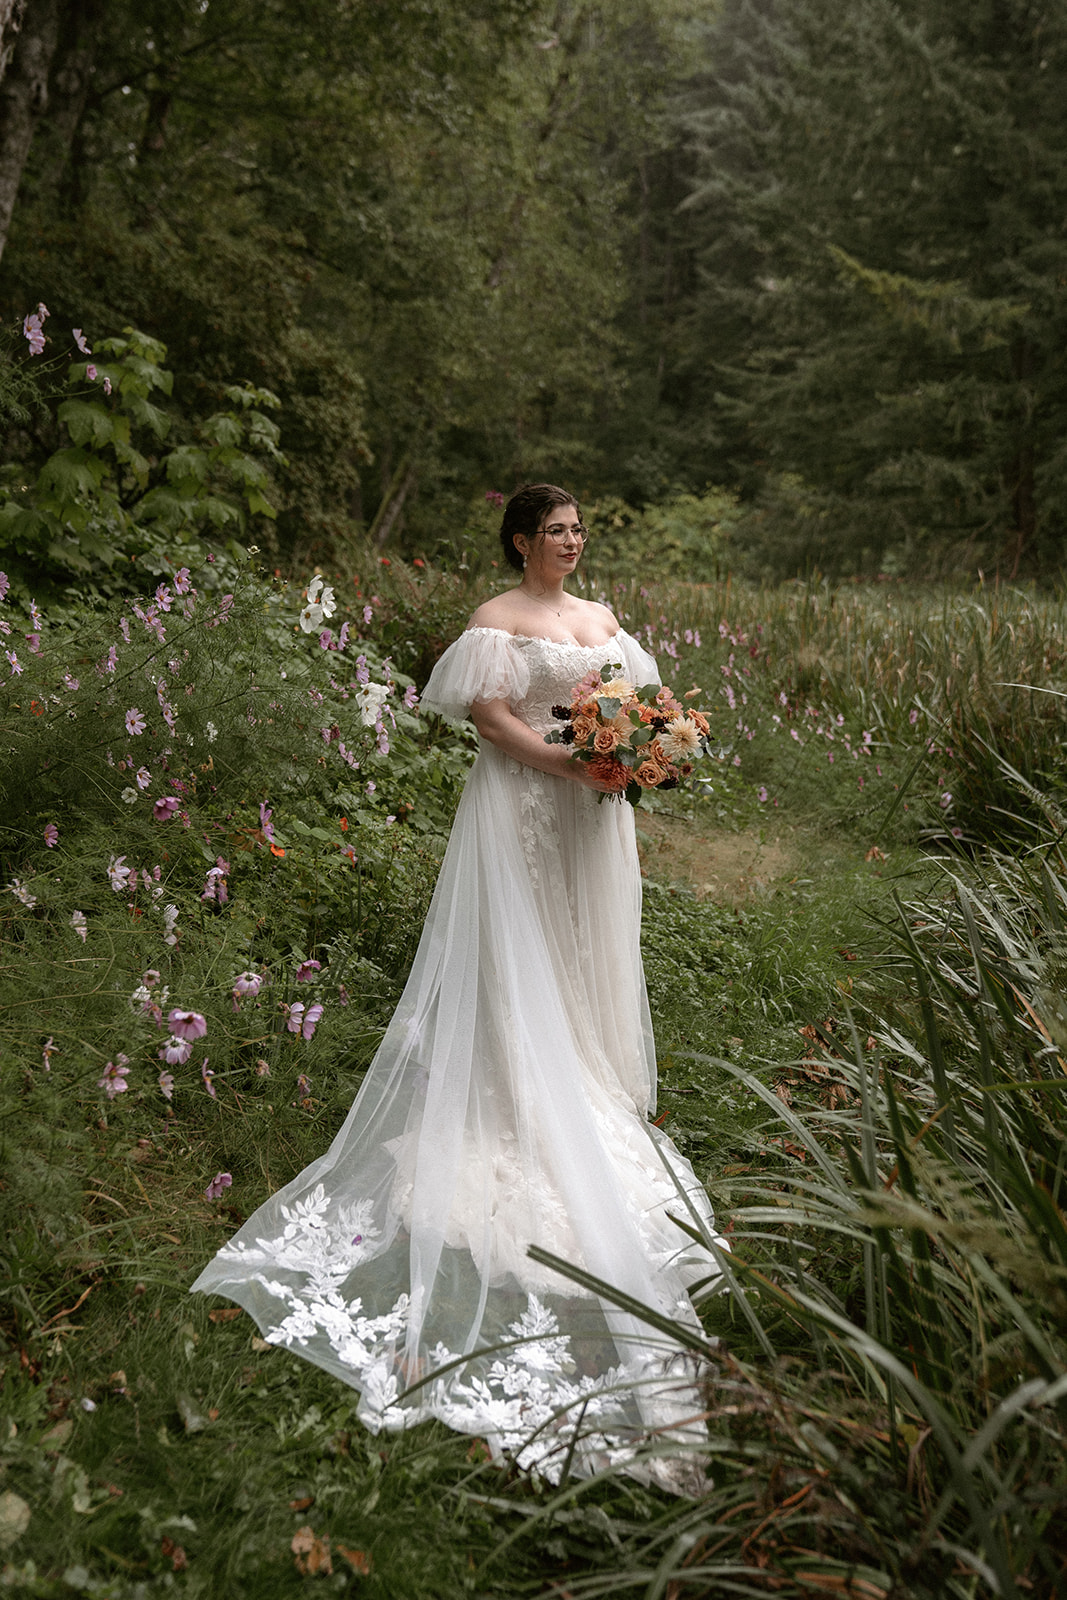 Stunning bridal portrait at Bridal Veil Lakes in Oregon